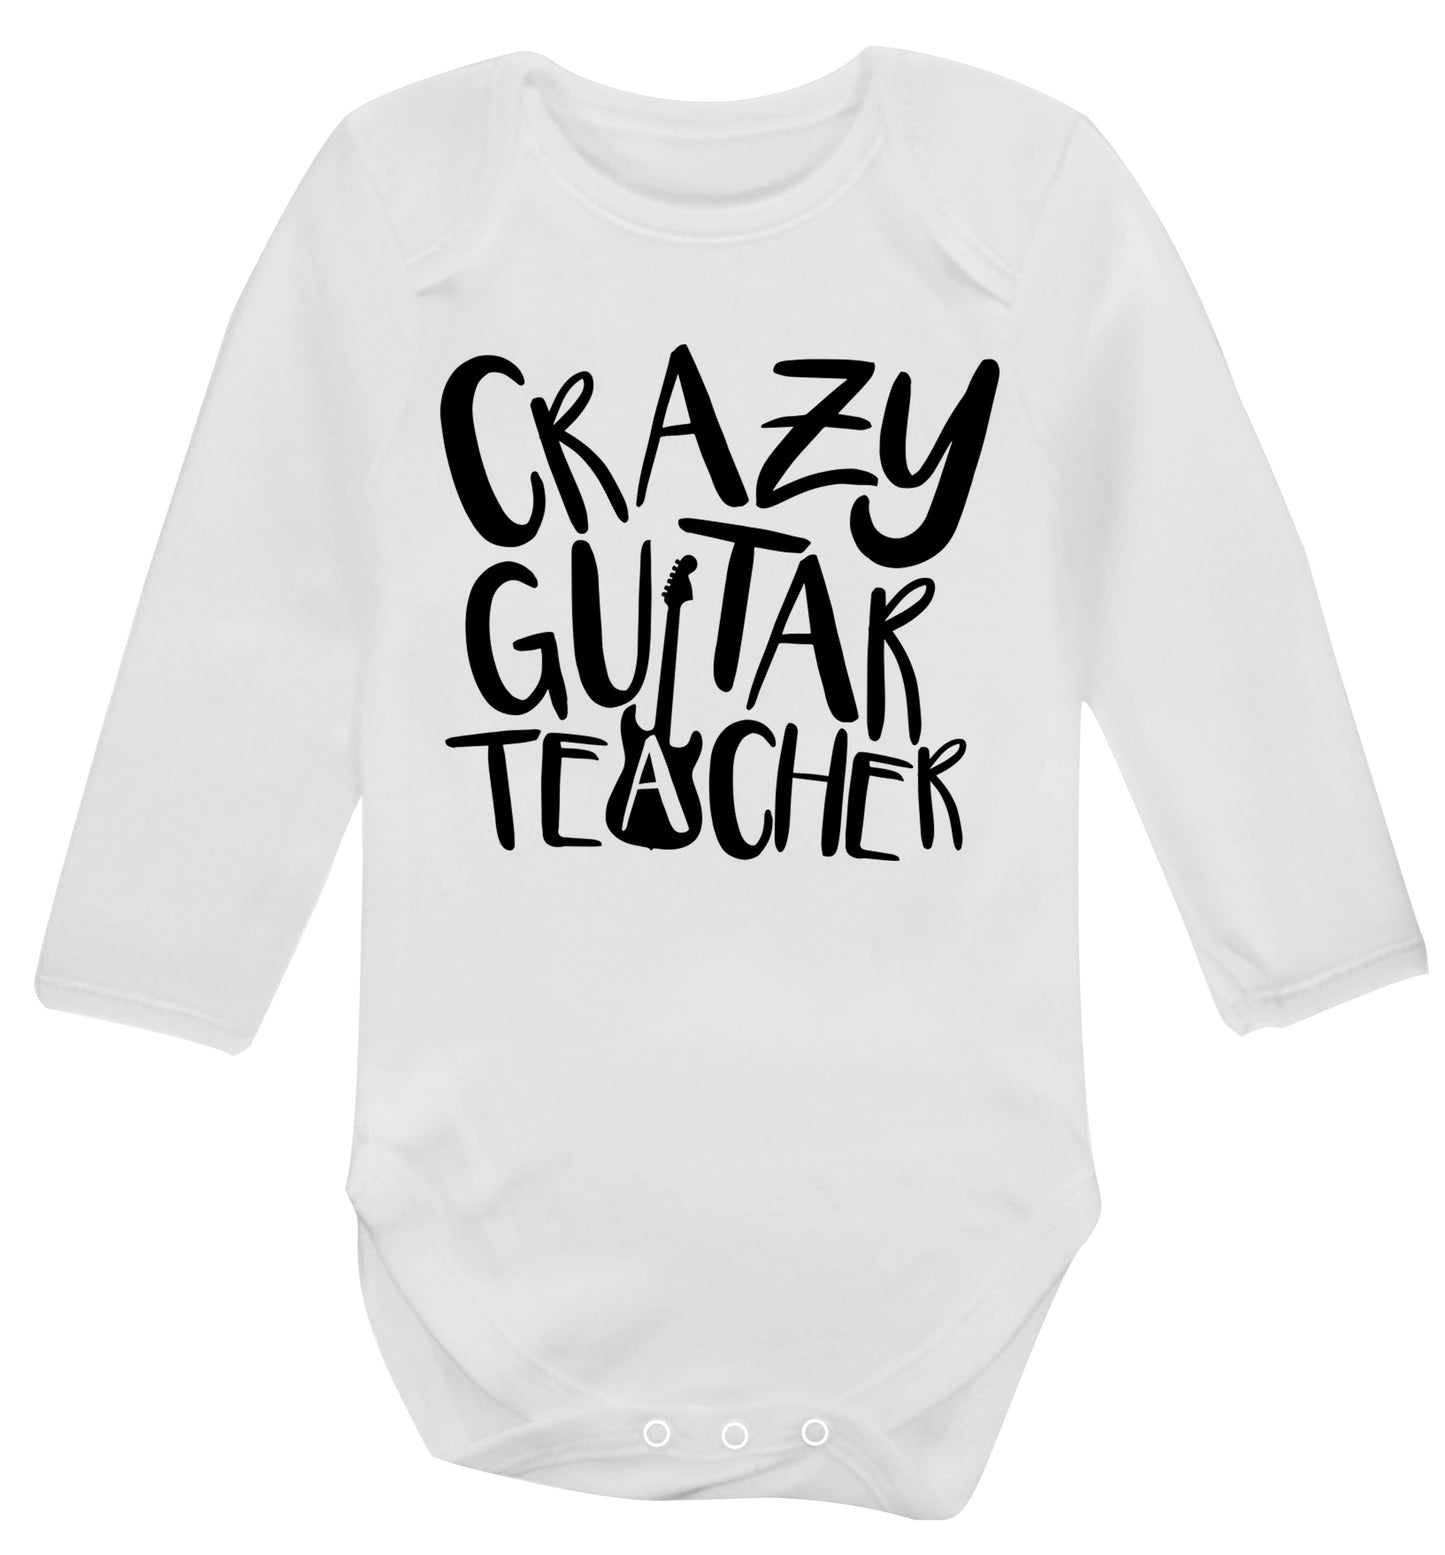 Crazy guitar teacher Baby Vest long sleeved white 6-12 months